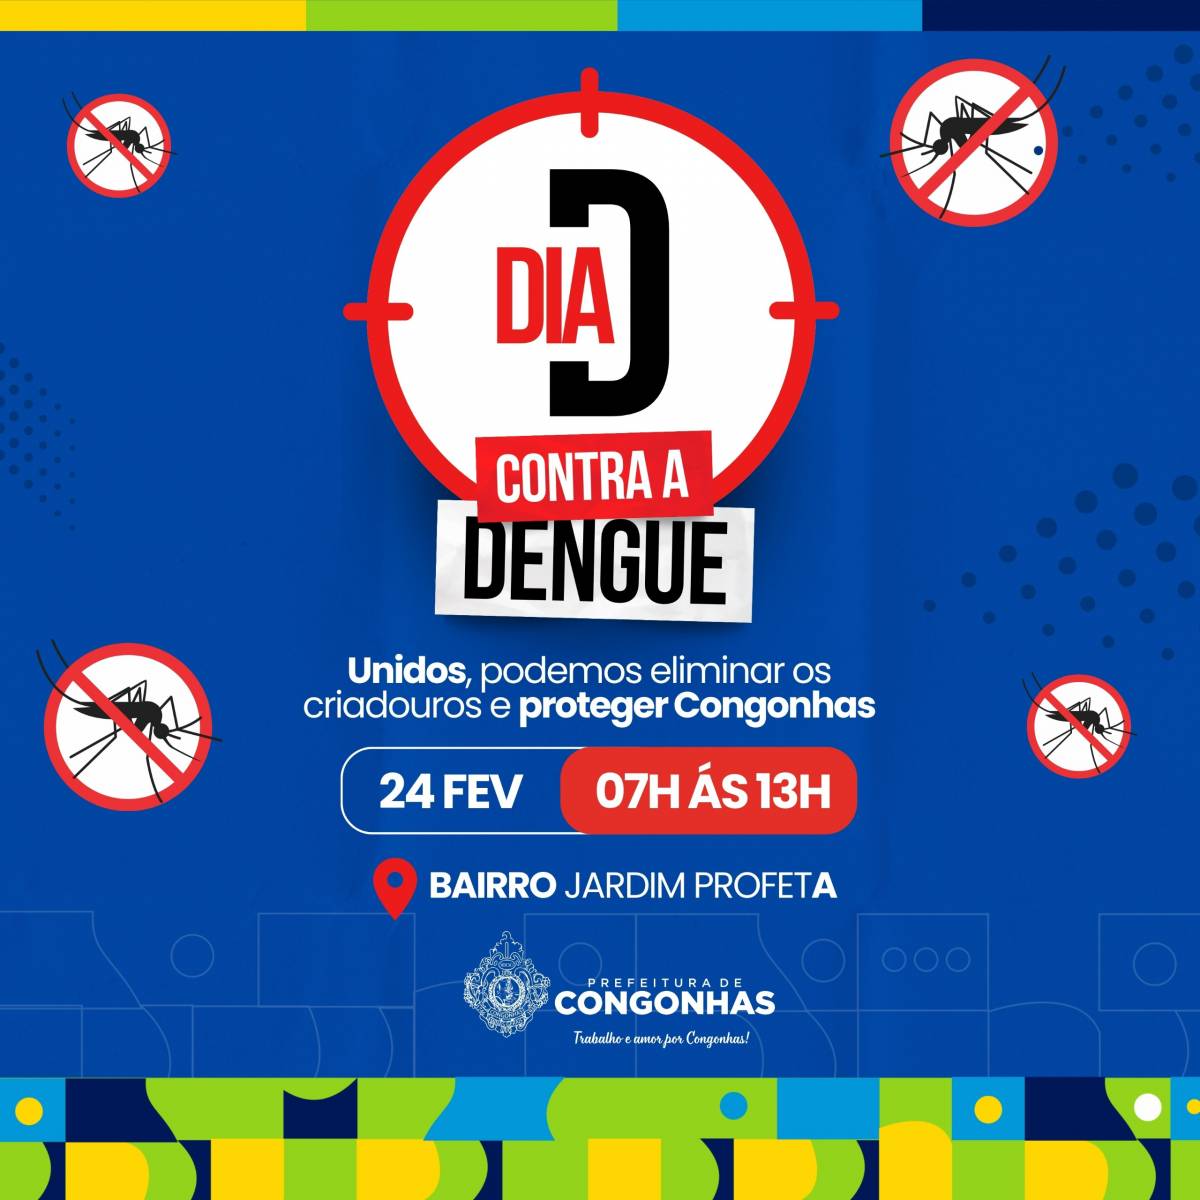 Prefeitura de Congonhas promove Dia “D” de combate à Dengue